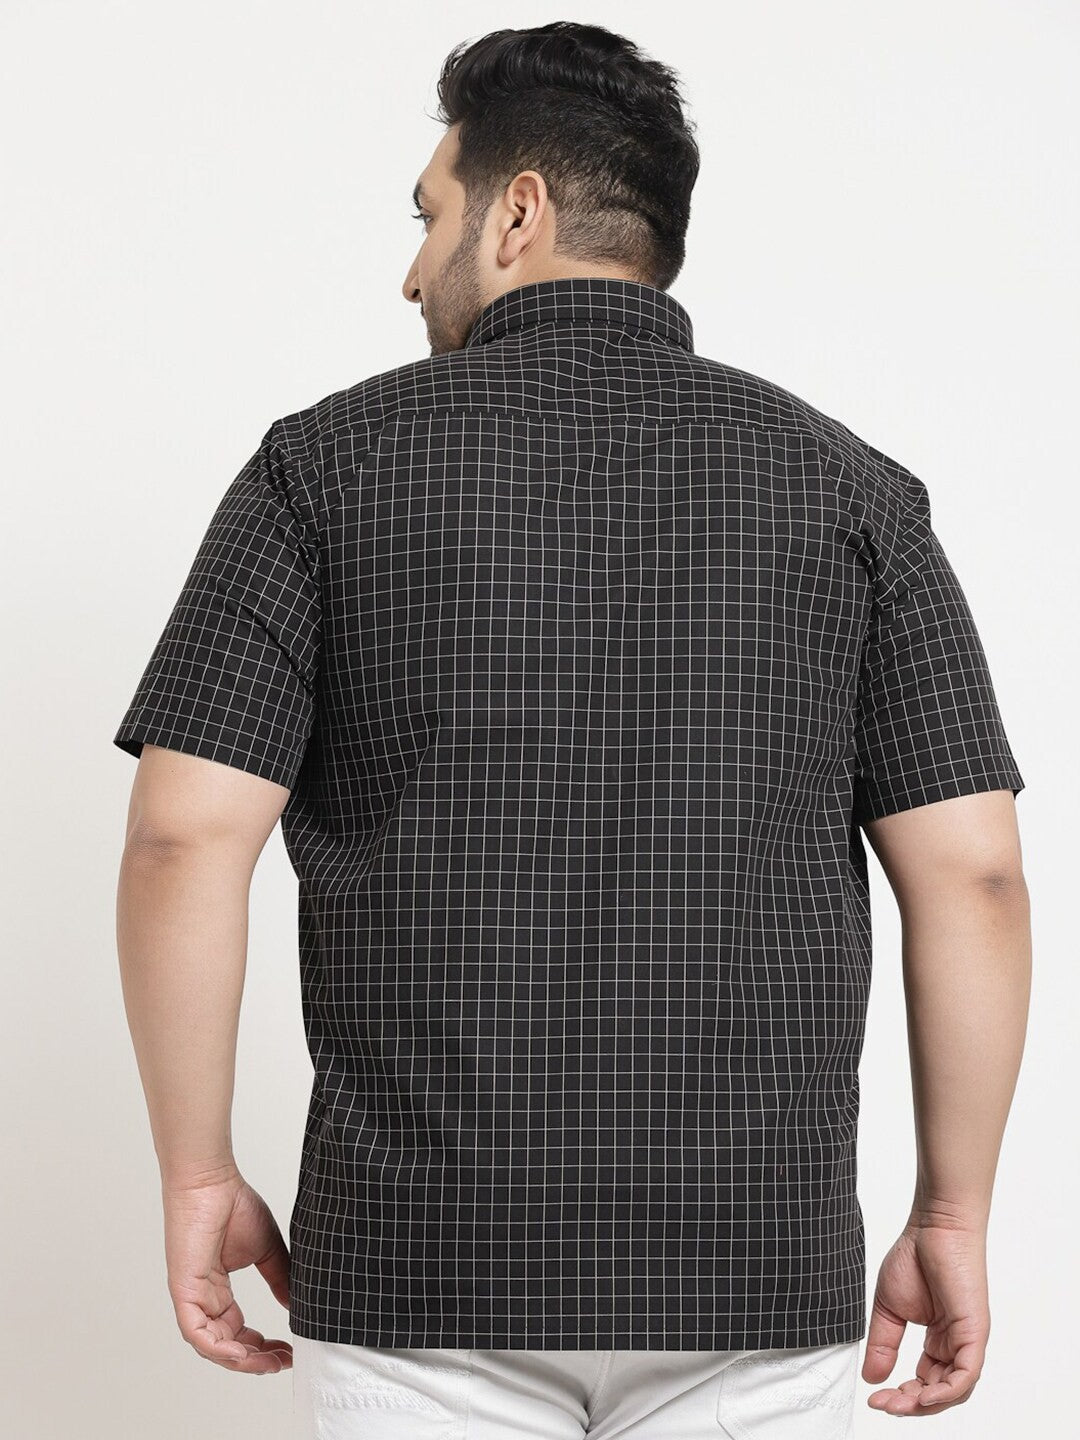 plusS Plus Size Men Black Grid Tattersall Checks Checked Cotton Casual Shirt